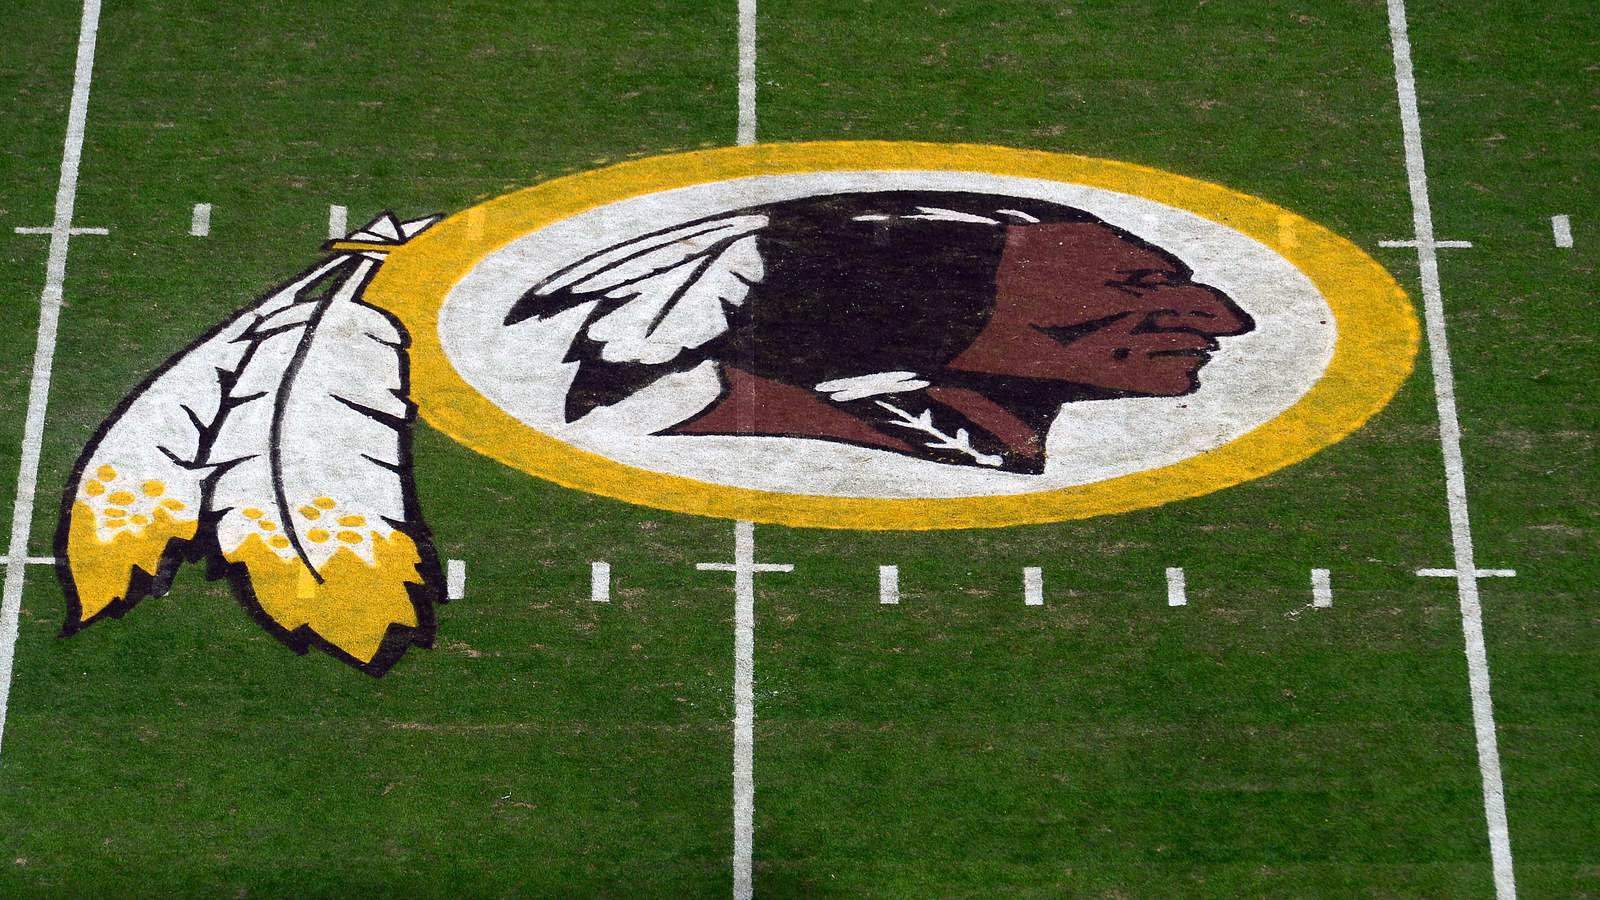 Redskins will undergo a thorough review regarding name change